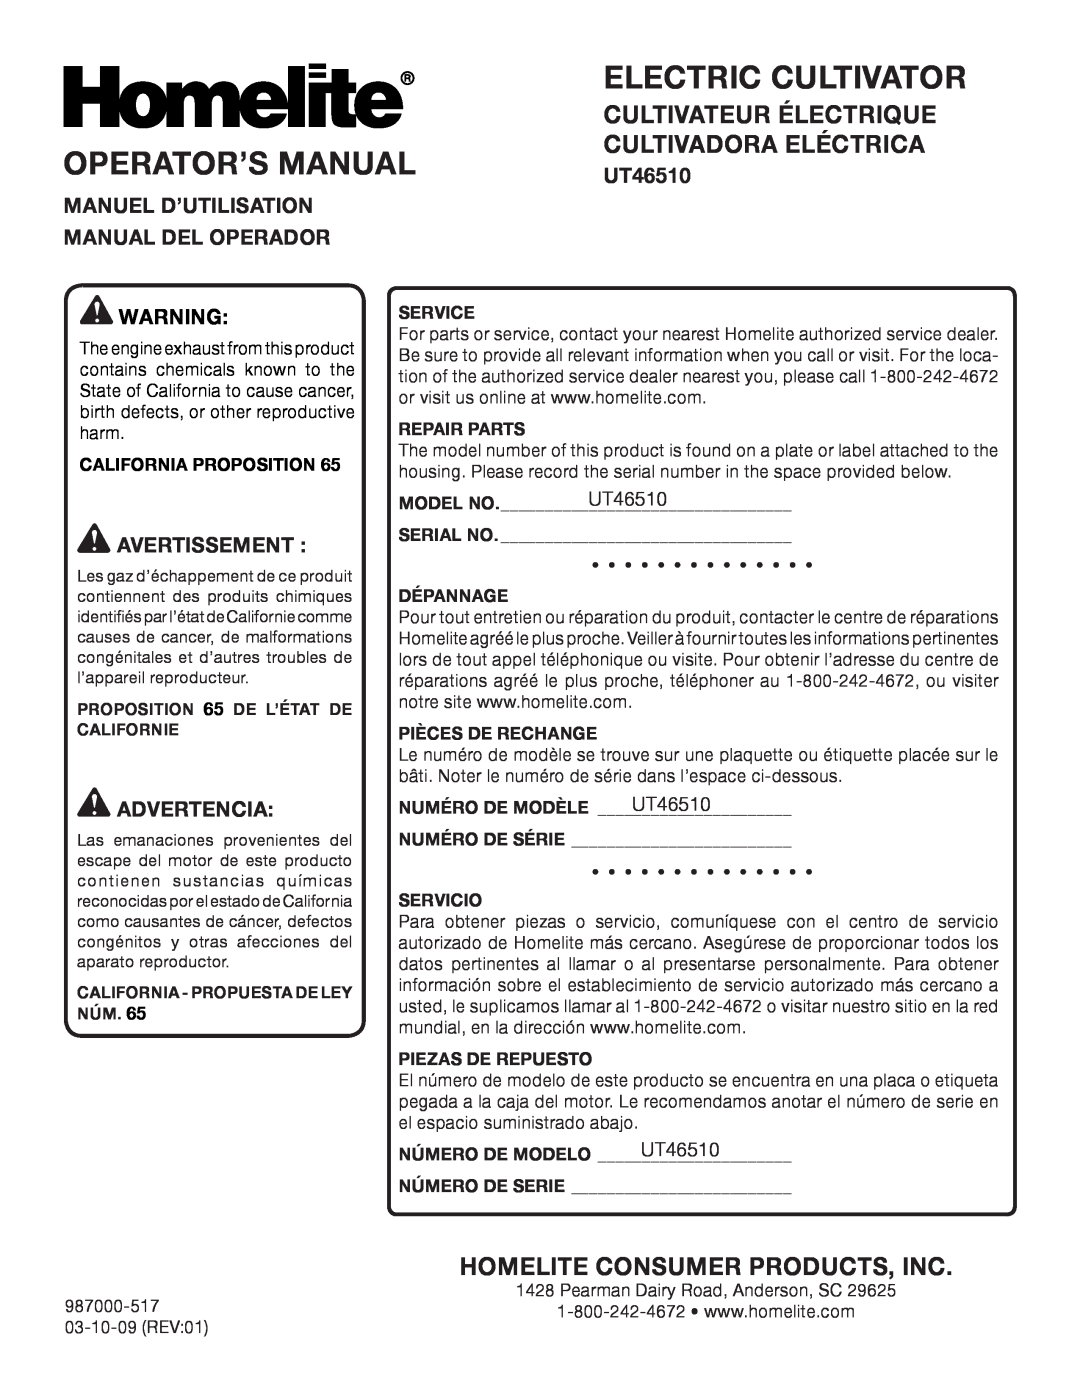 Homelite UT46510 ELECTRIC Cultivator, Operator’S Manual, Manuel D’Utilisation, Manual Del Operador, Avertissement  